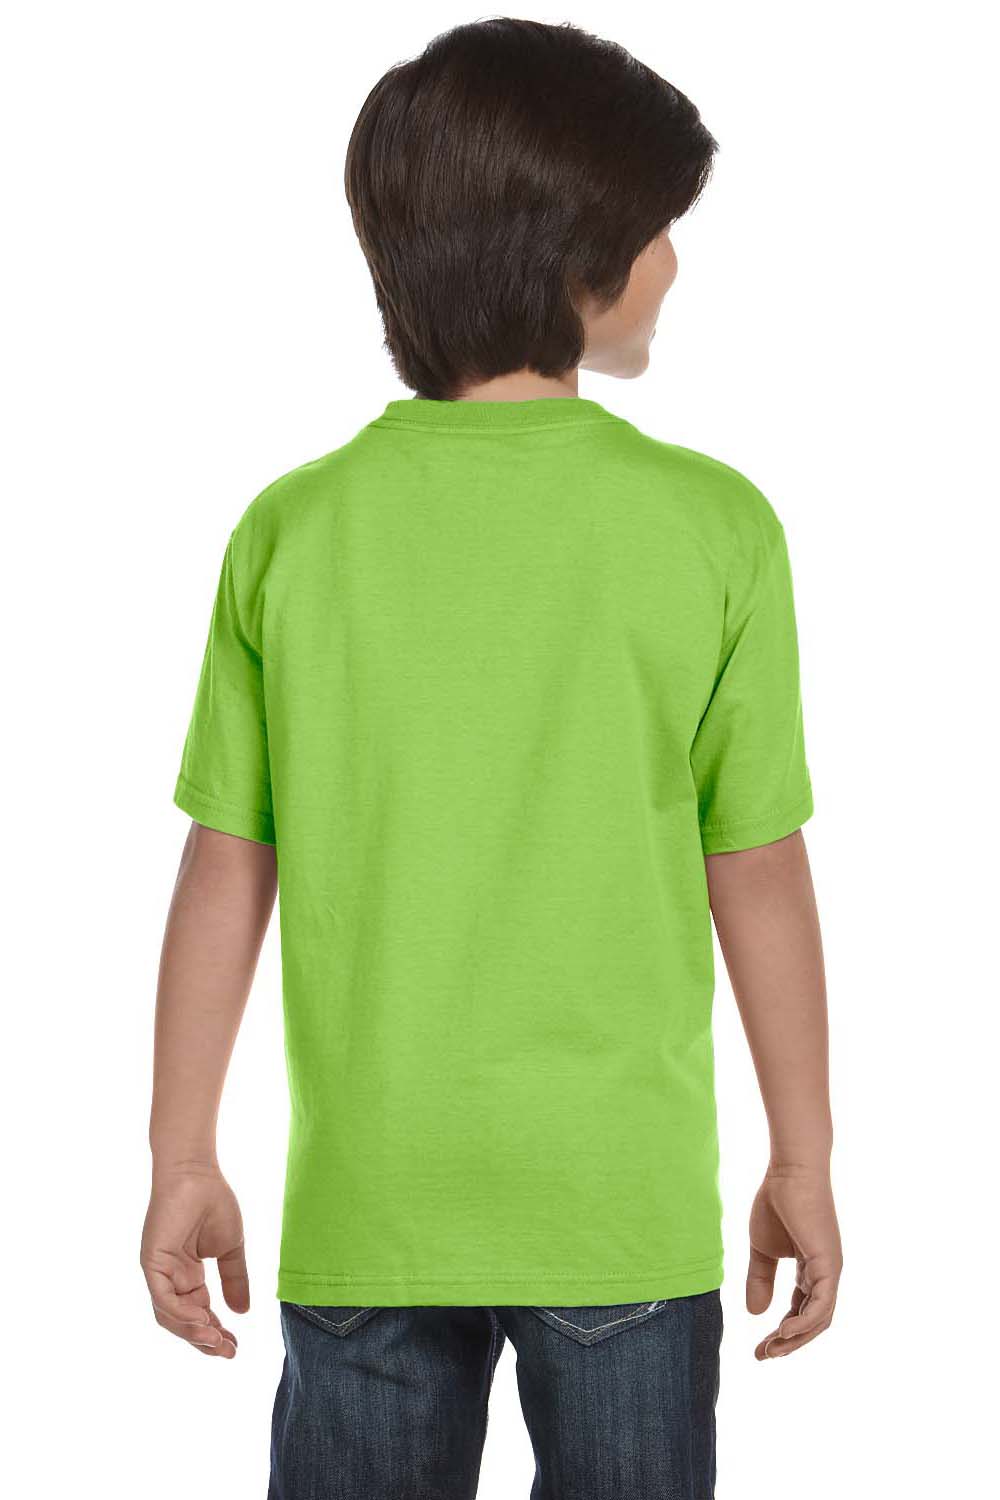 Hanes 5480 Youth ComfortSoft Short Sleeve Crewneck T-Shirt Lime Green Back